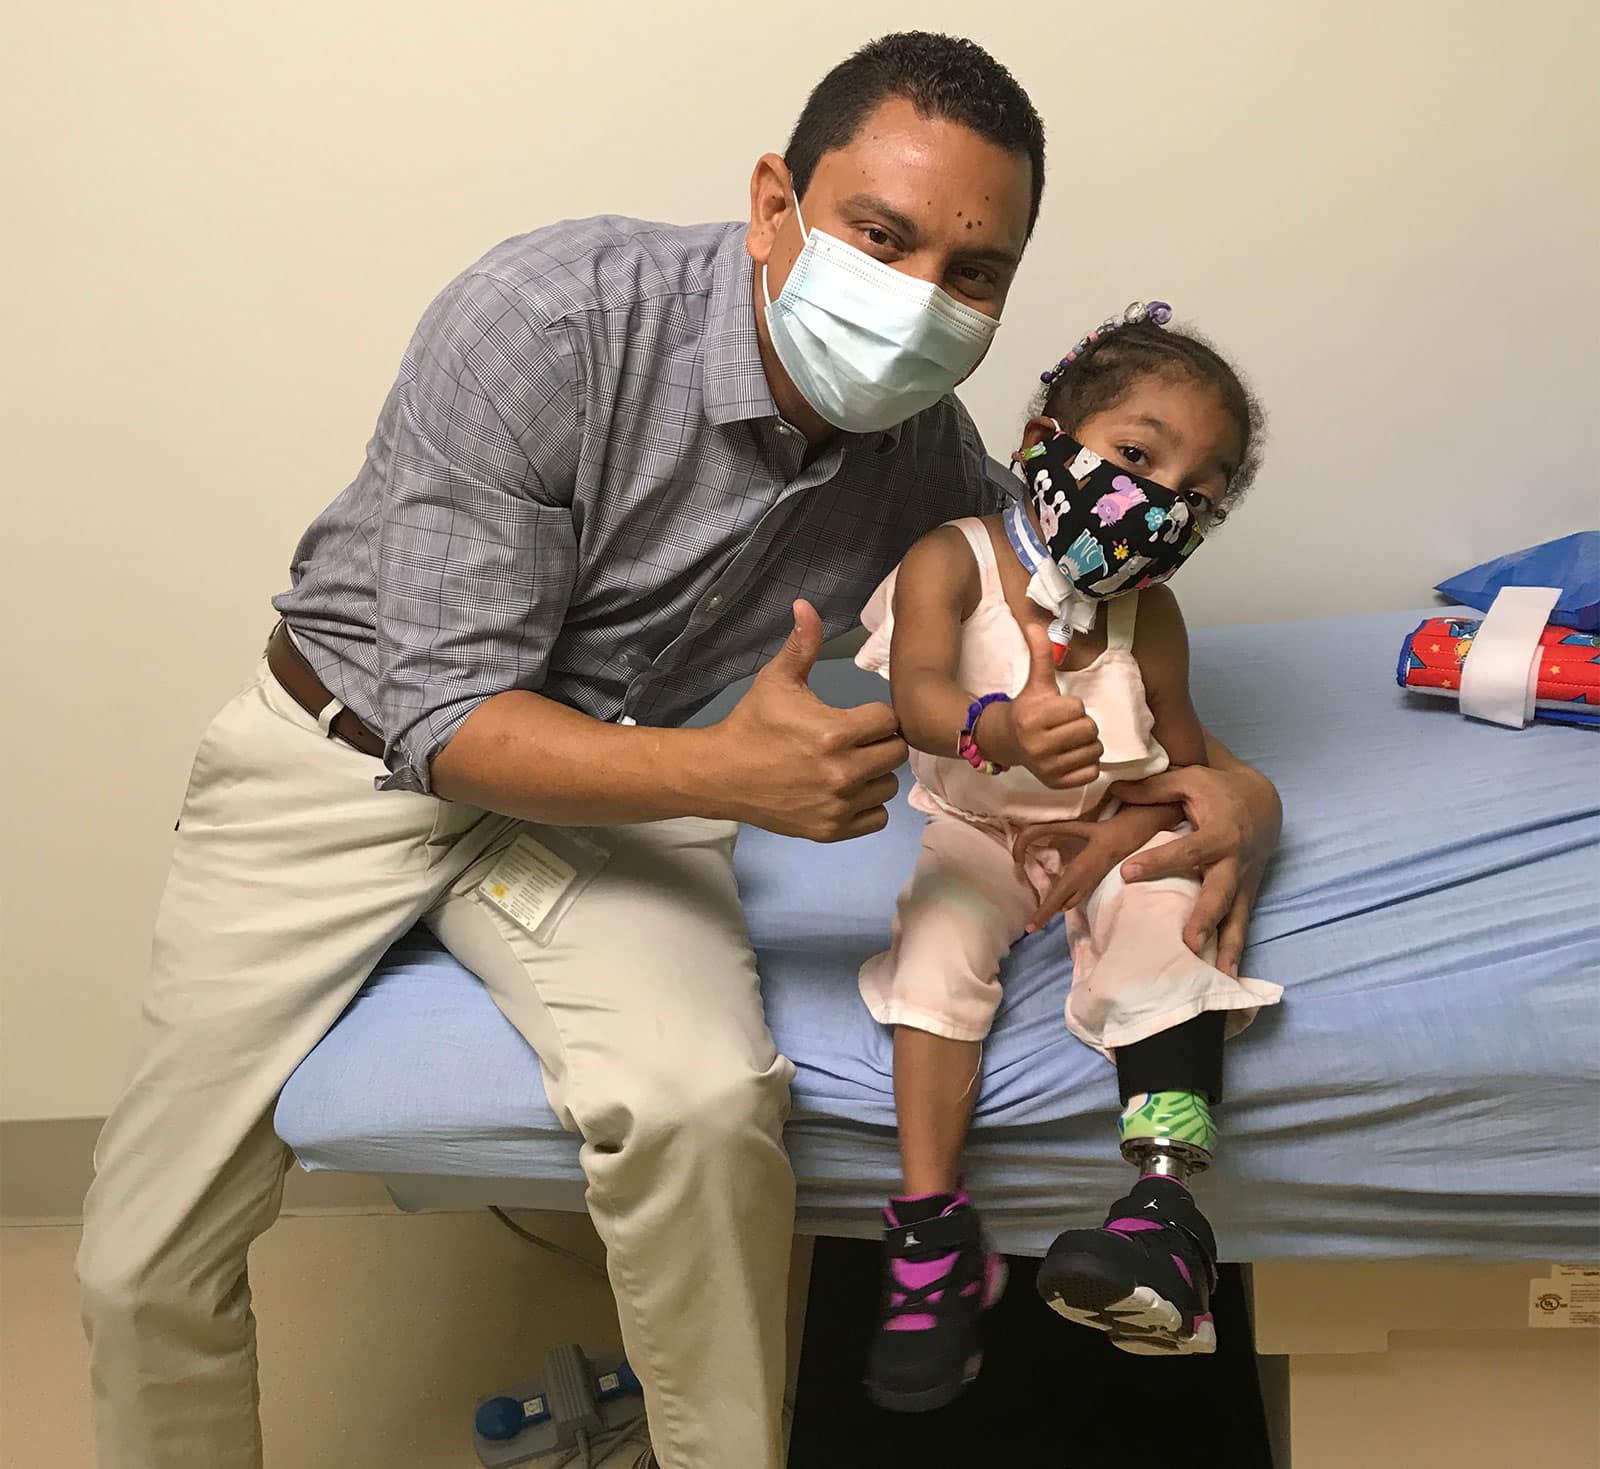 Girl with pediatric leg prosthetic